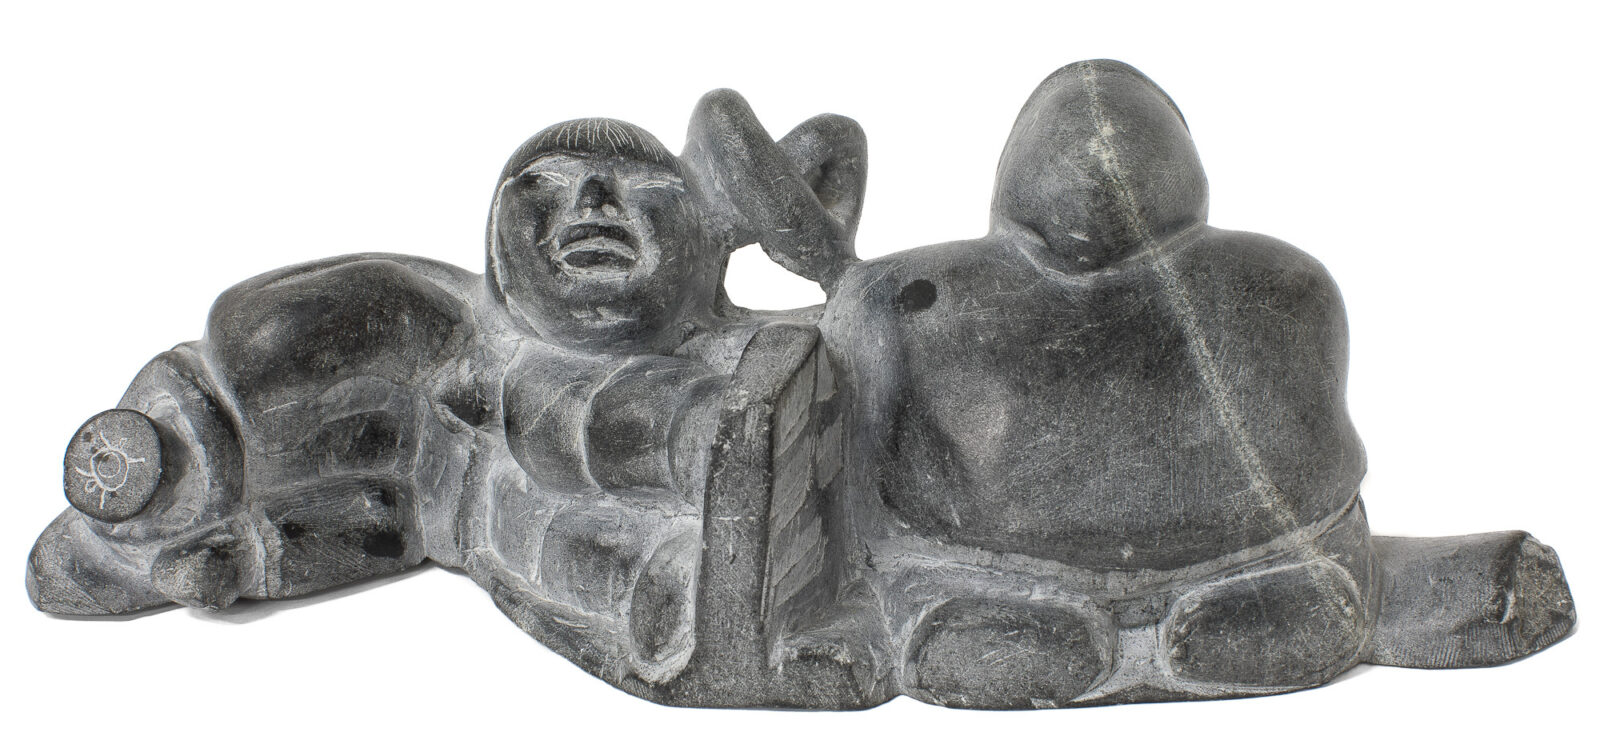 Davidialuk Alasua Amittu - untitled (hunter under northern lights with decapitated head and body)